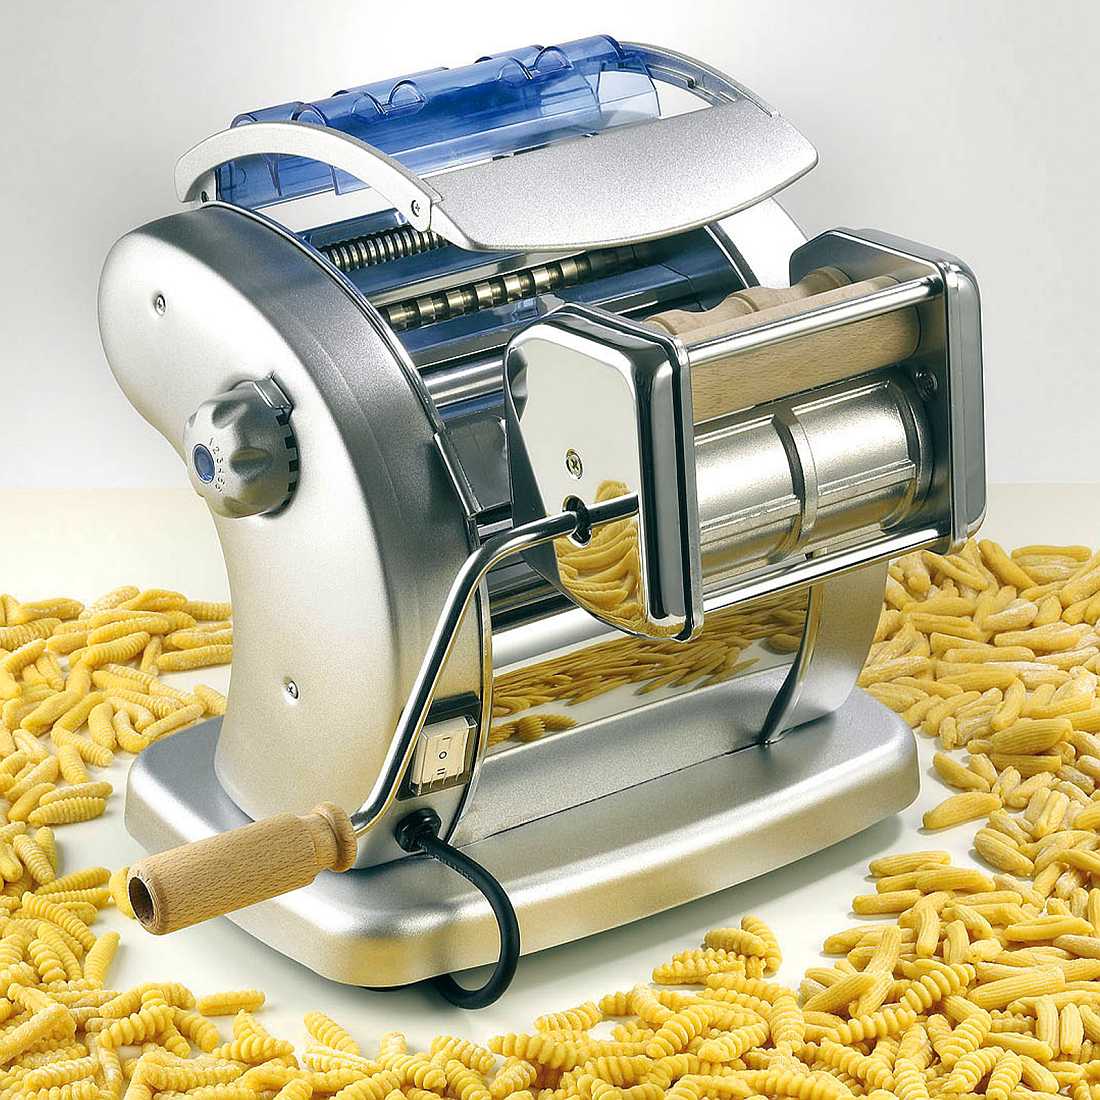 Imperia - Pasta Machine Imperia Pasta Presto - Electrical (Articles home)